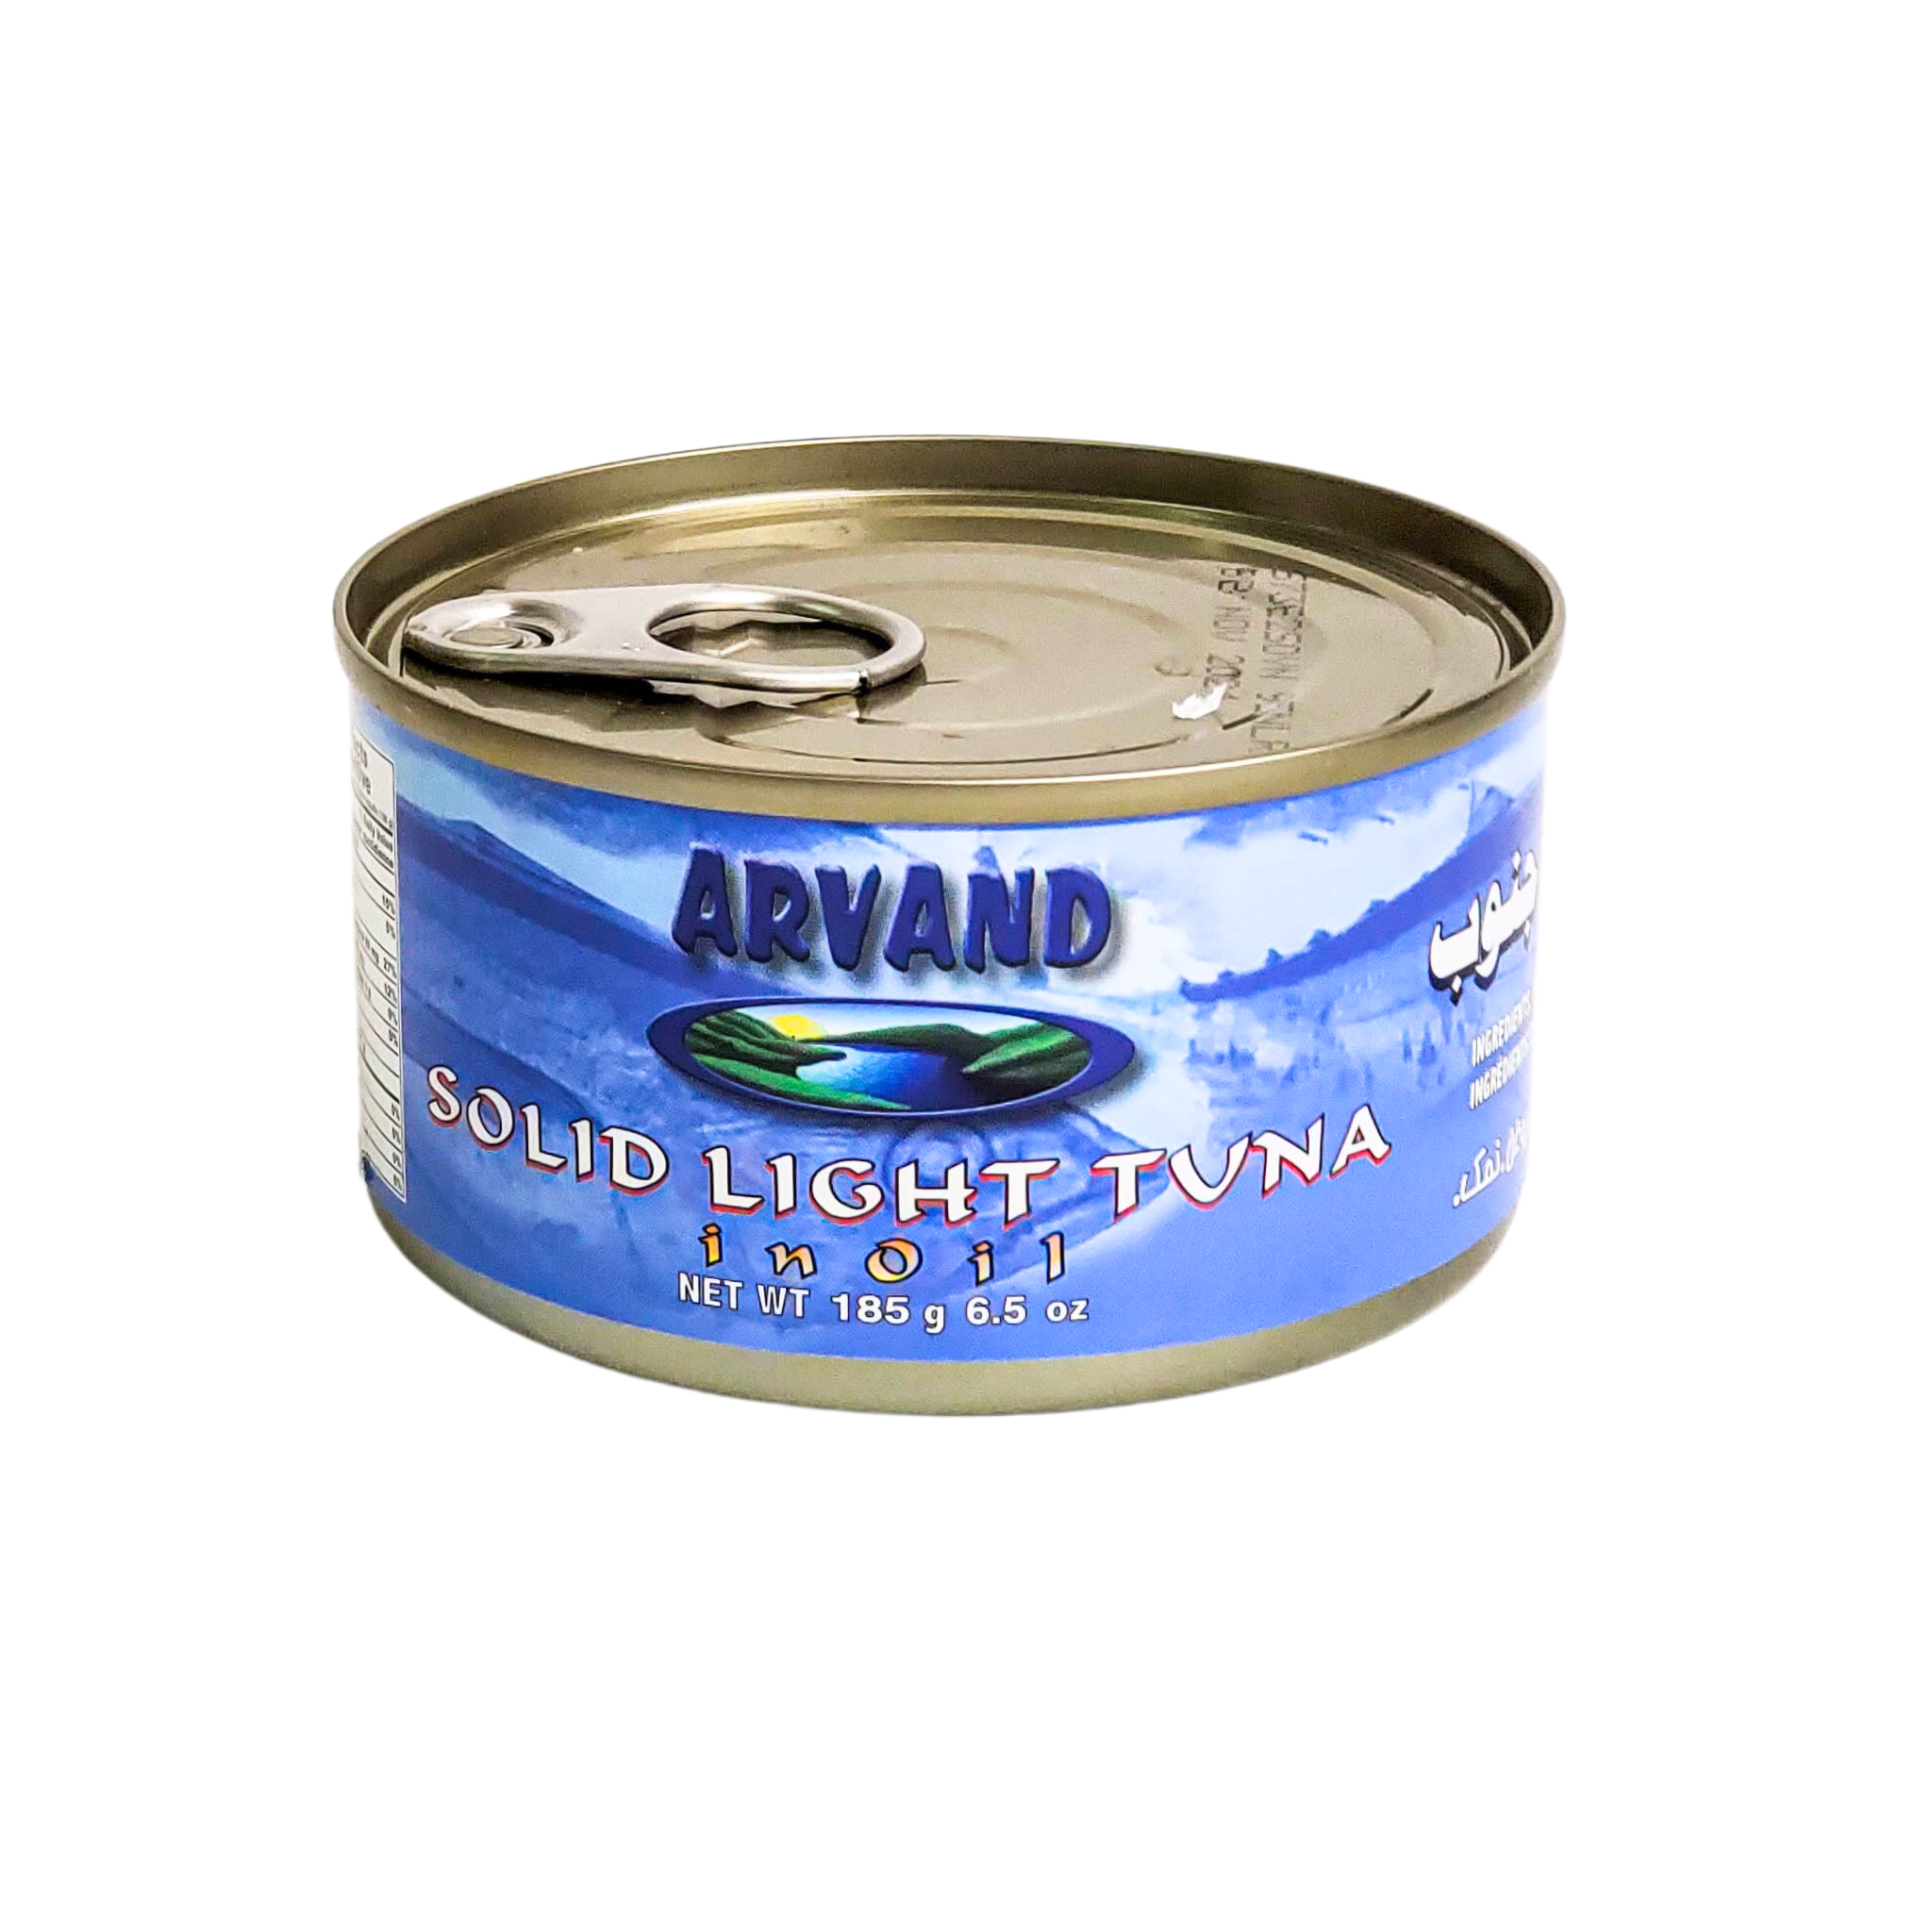 Arvand Solid Light Tuna in Oil 185g